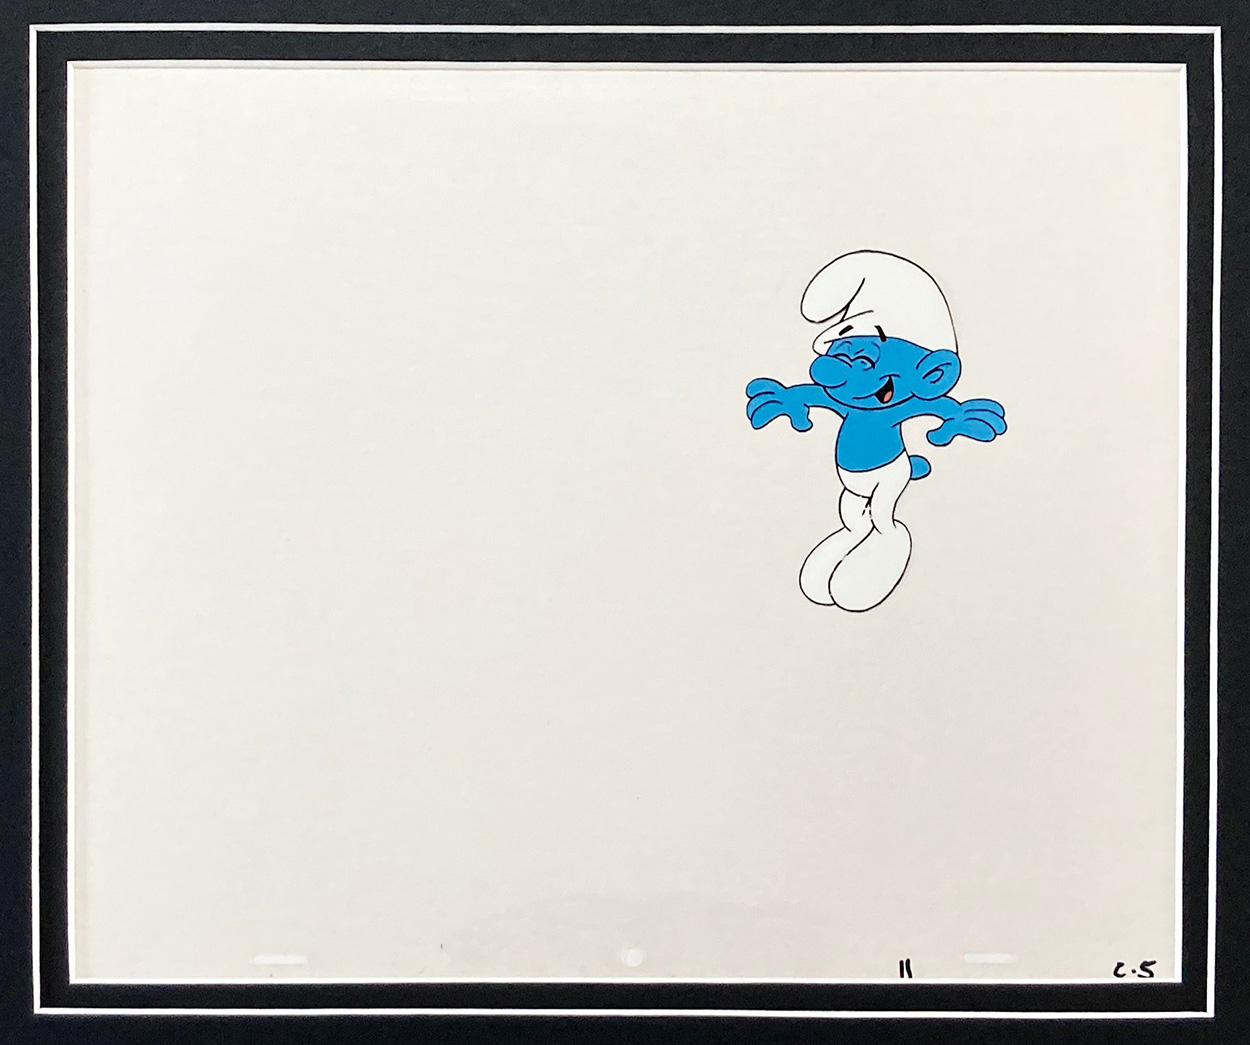 Laughing Smurf - Animation Cel (Original) art by Hanna-Barbera Studio at The Illustration Art Gallery